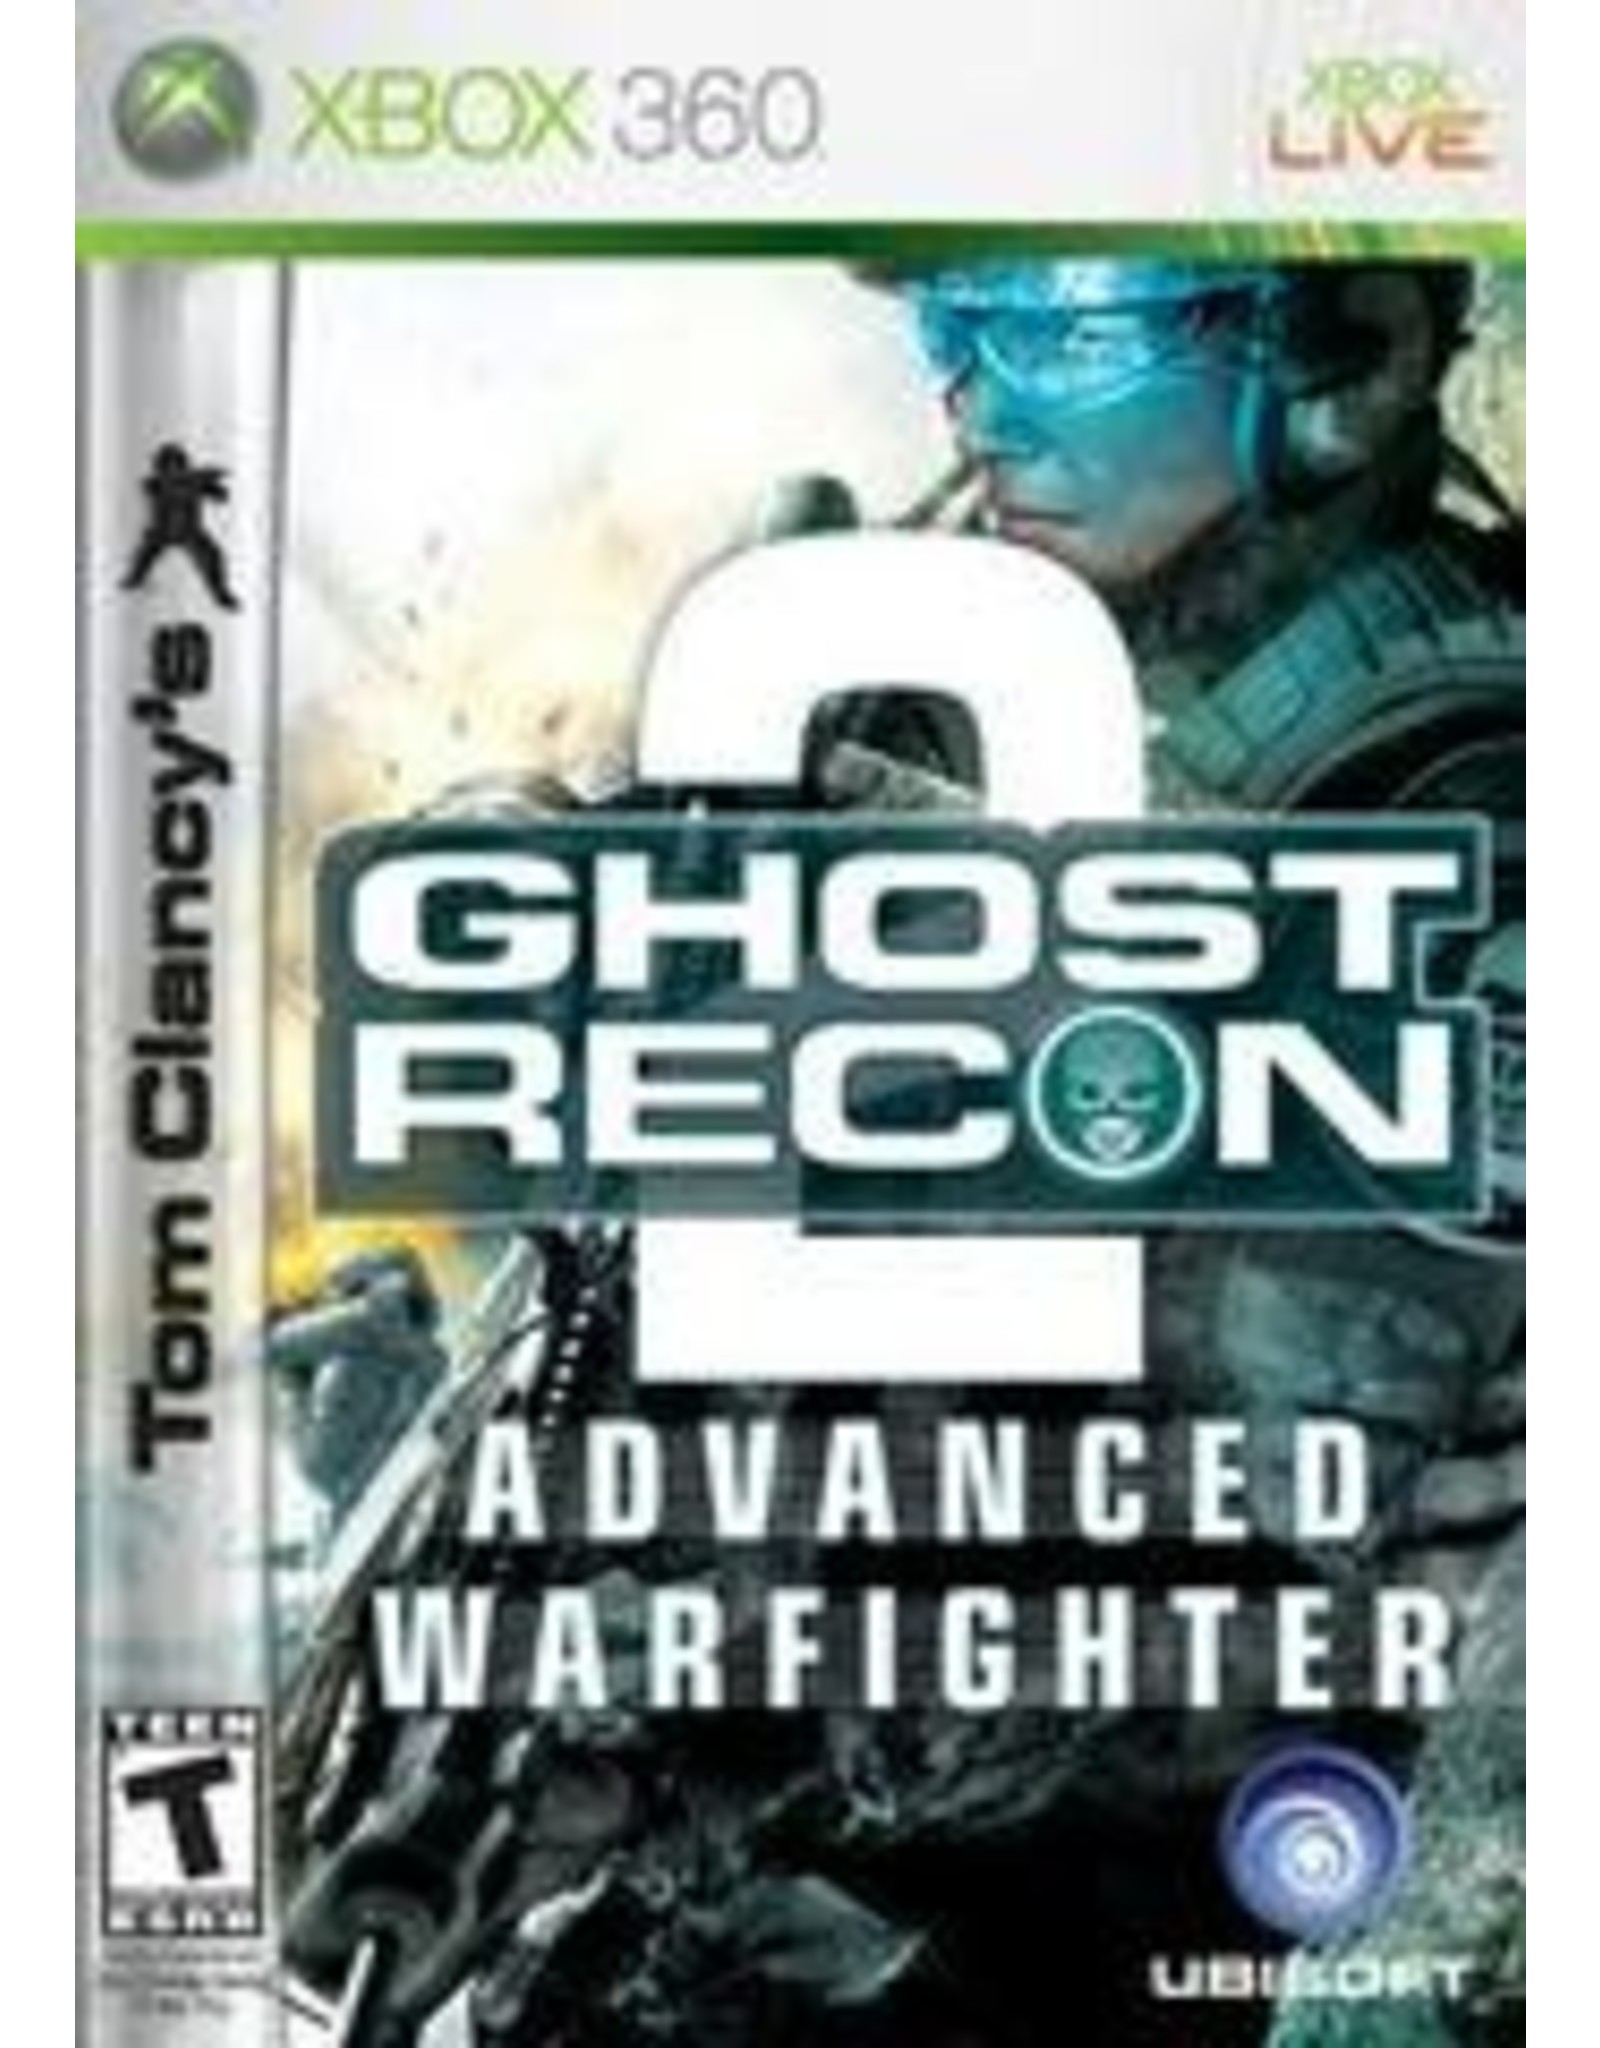 Xbox 360 Ghost Recon Advanced Warfighter 2 (Used)